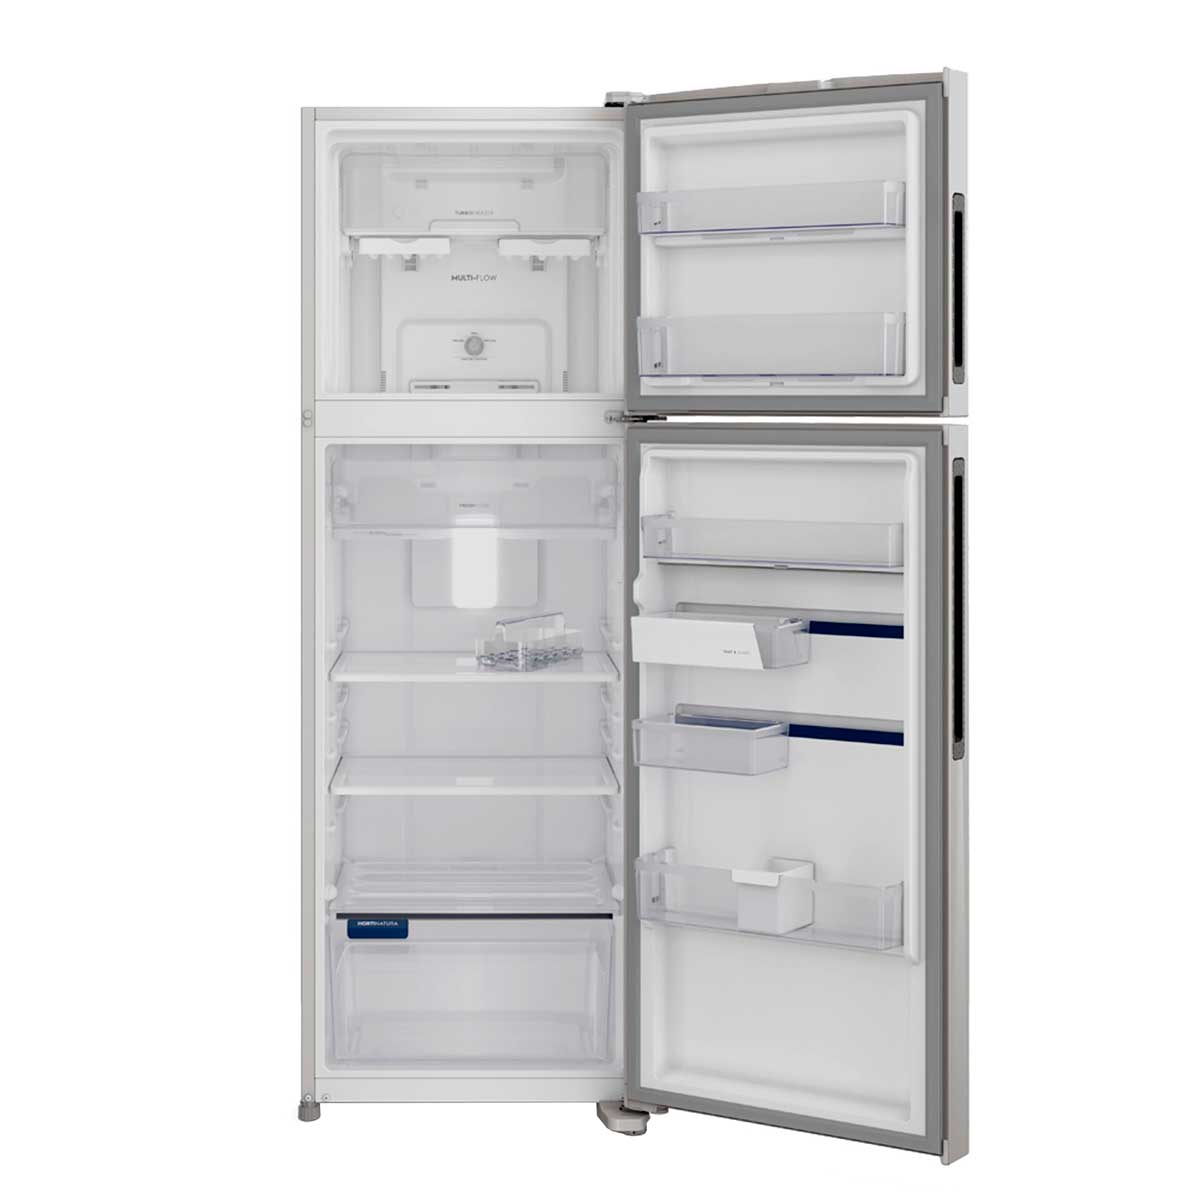 geladeira-electrolux-frost-free-duplex-efficient-com-autosense-branca-390l--if43--220v-3.jpg